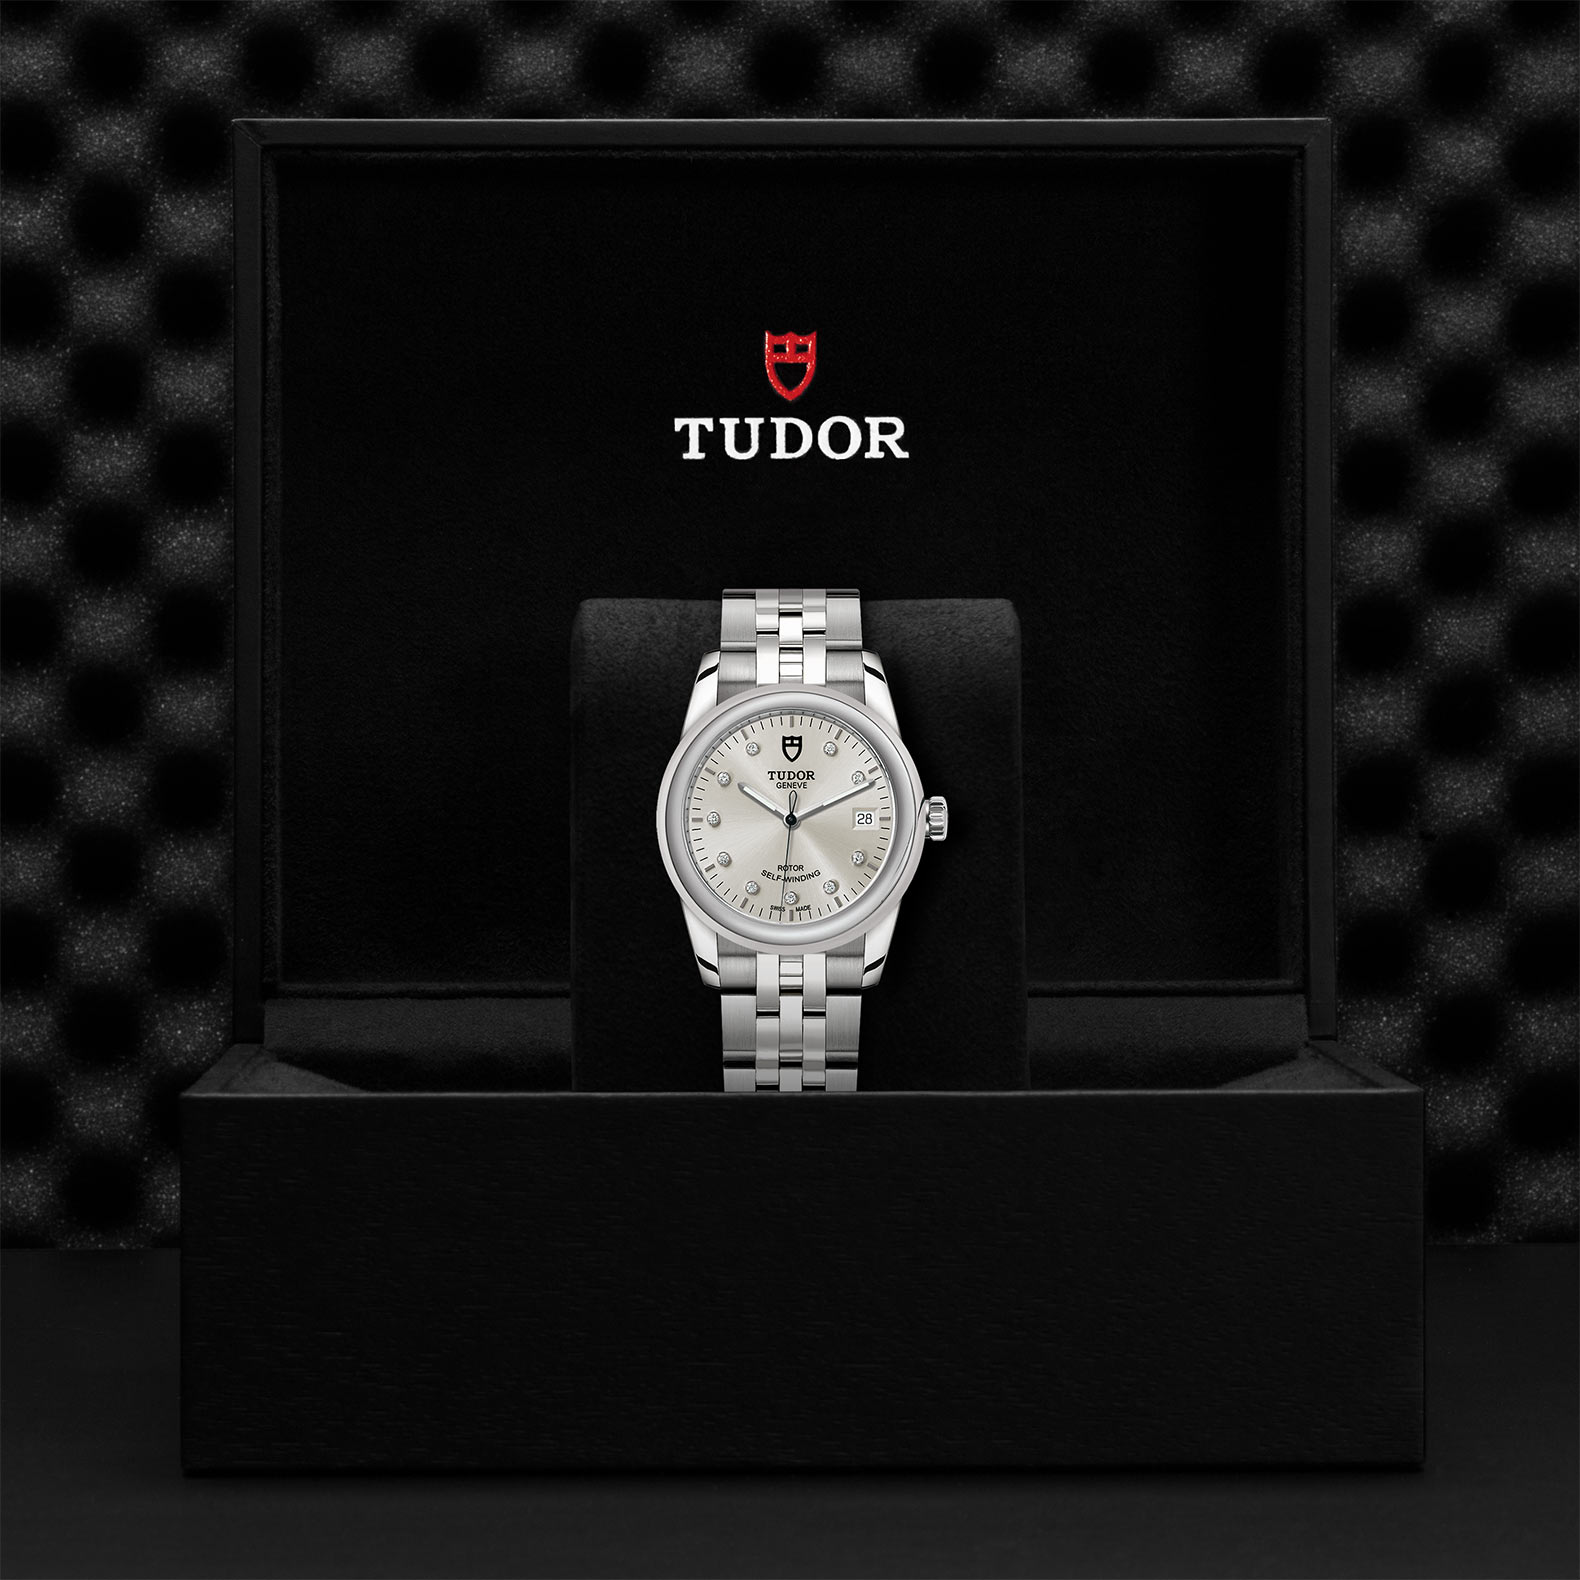 Tudor Glamour Date M55000-0006